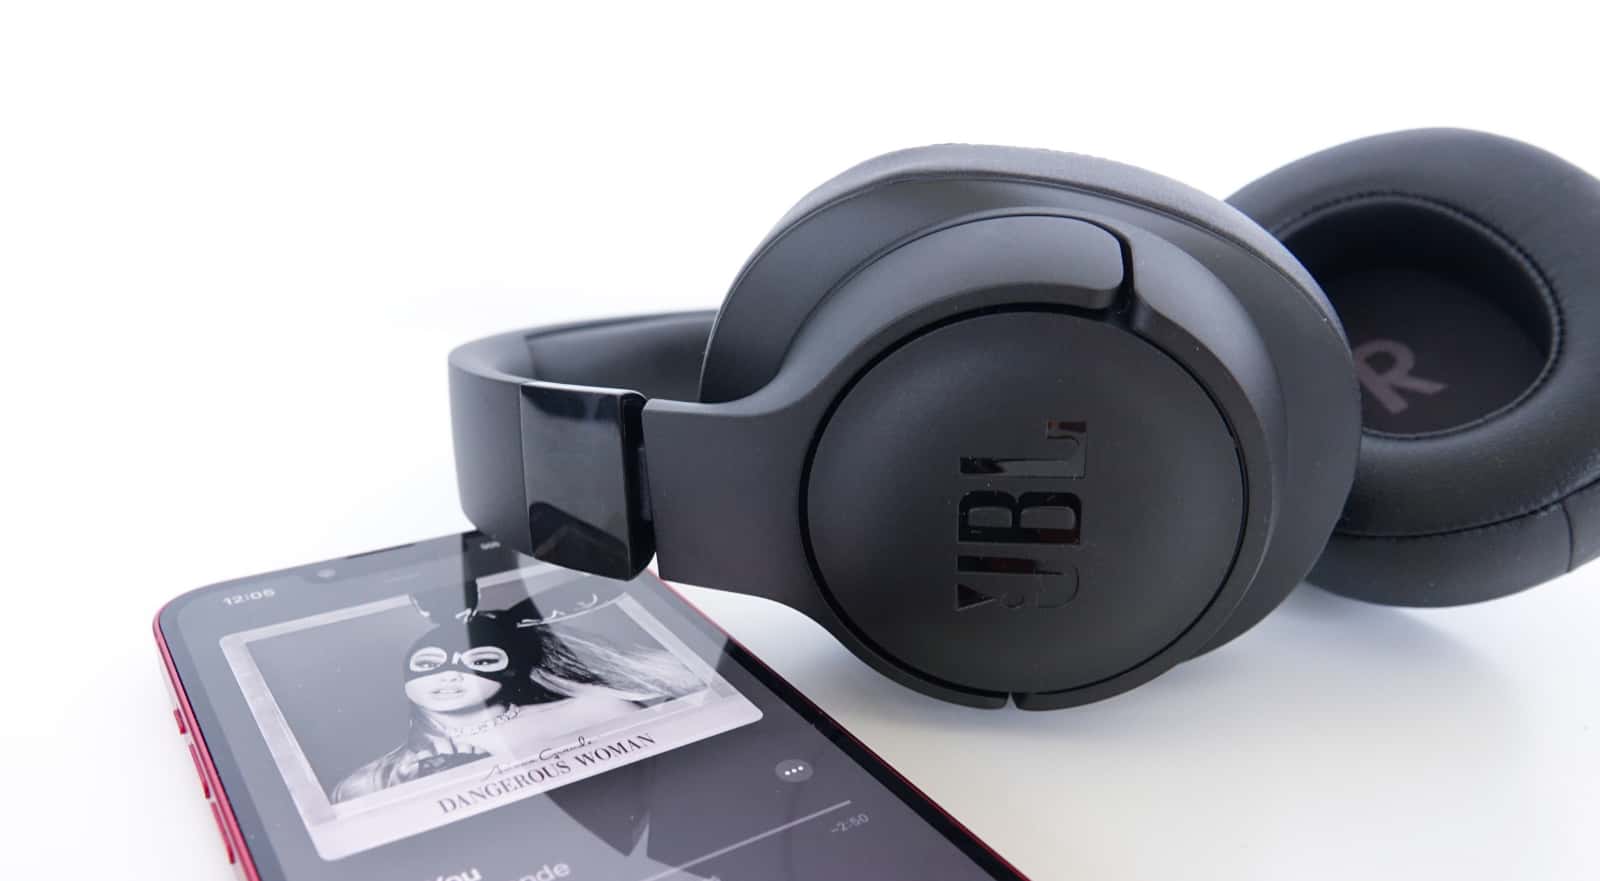 JBL Tune 760NC Wireless Noise Cancelling Over-Ear Headphones Black  JBLT760NCBLKAM - Best Buy